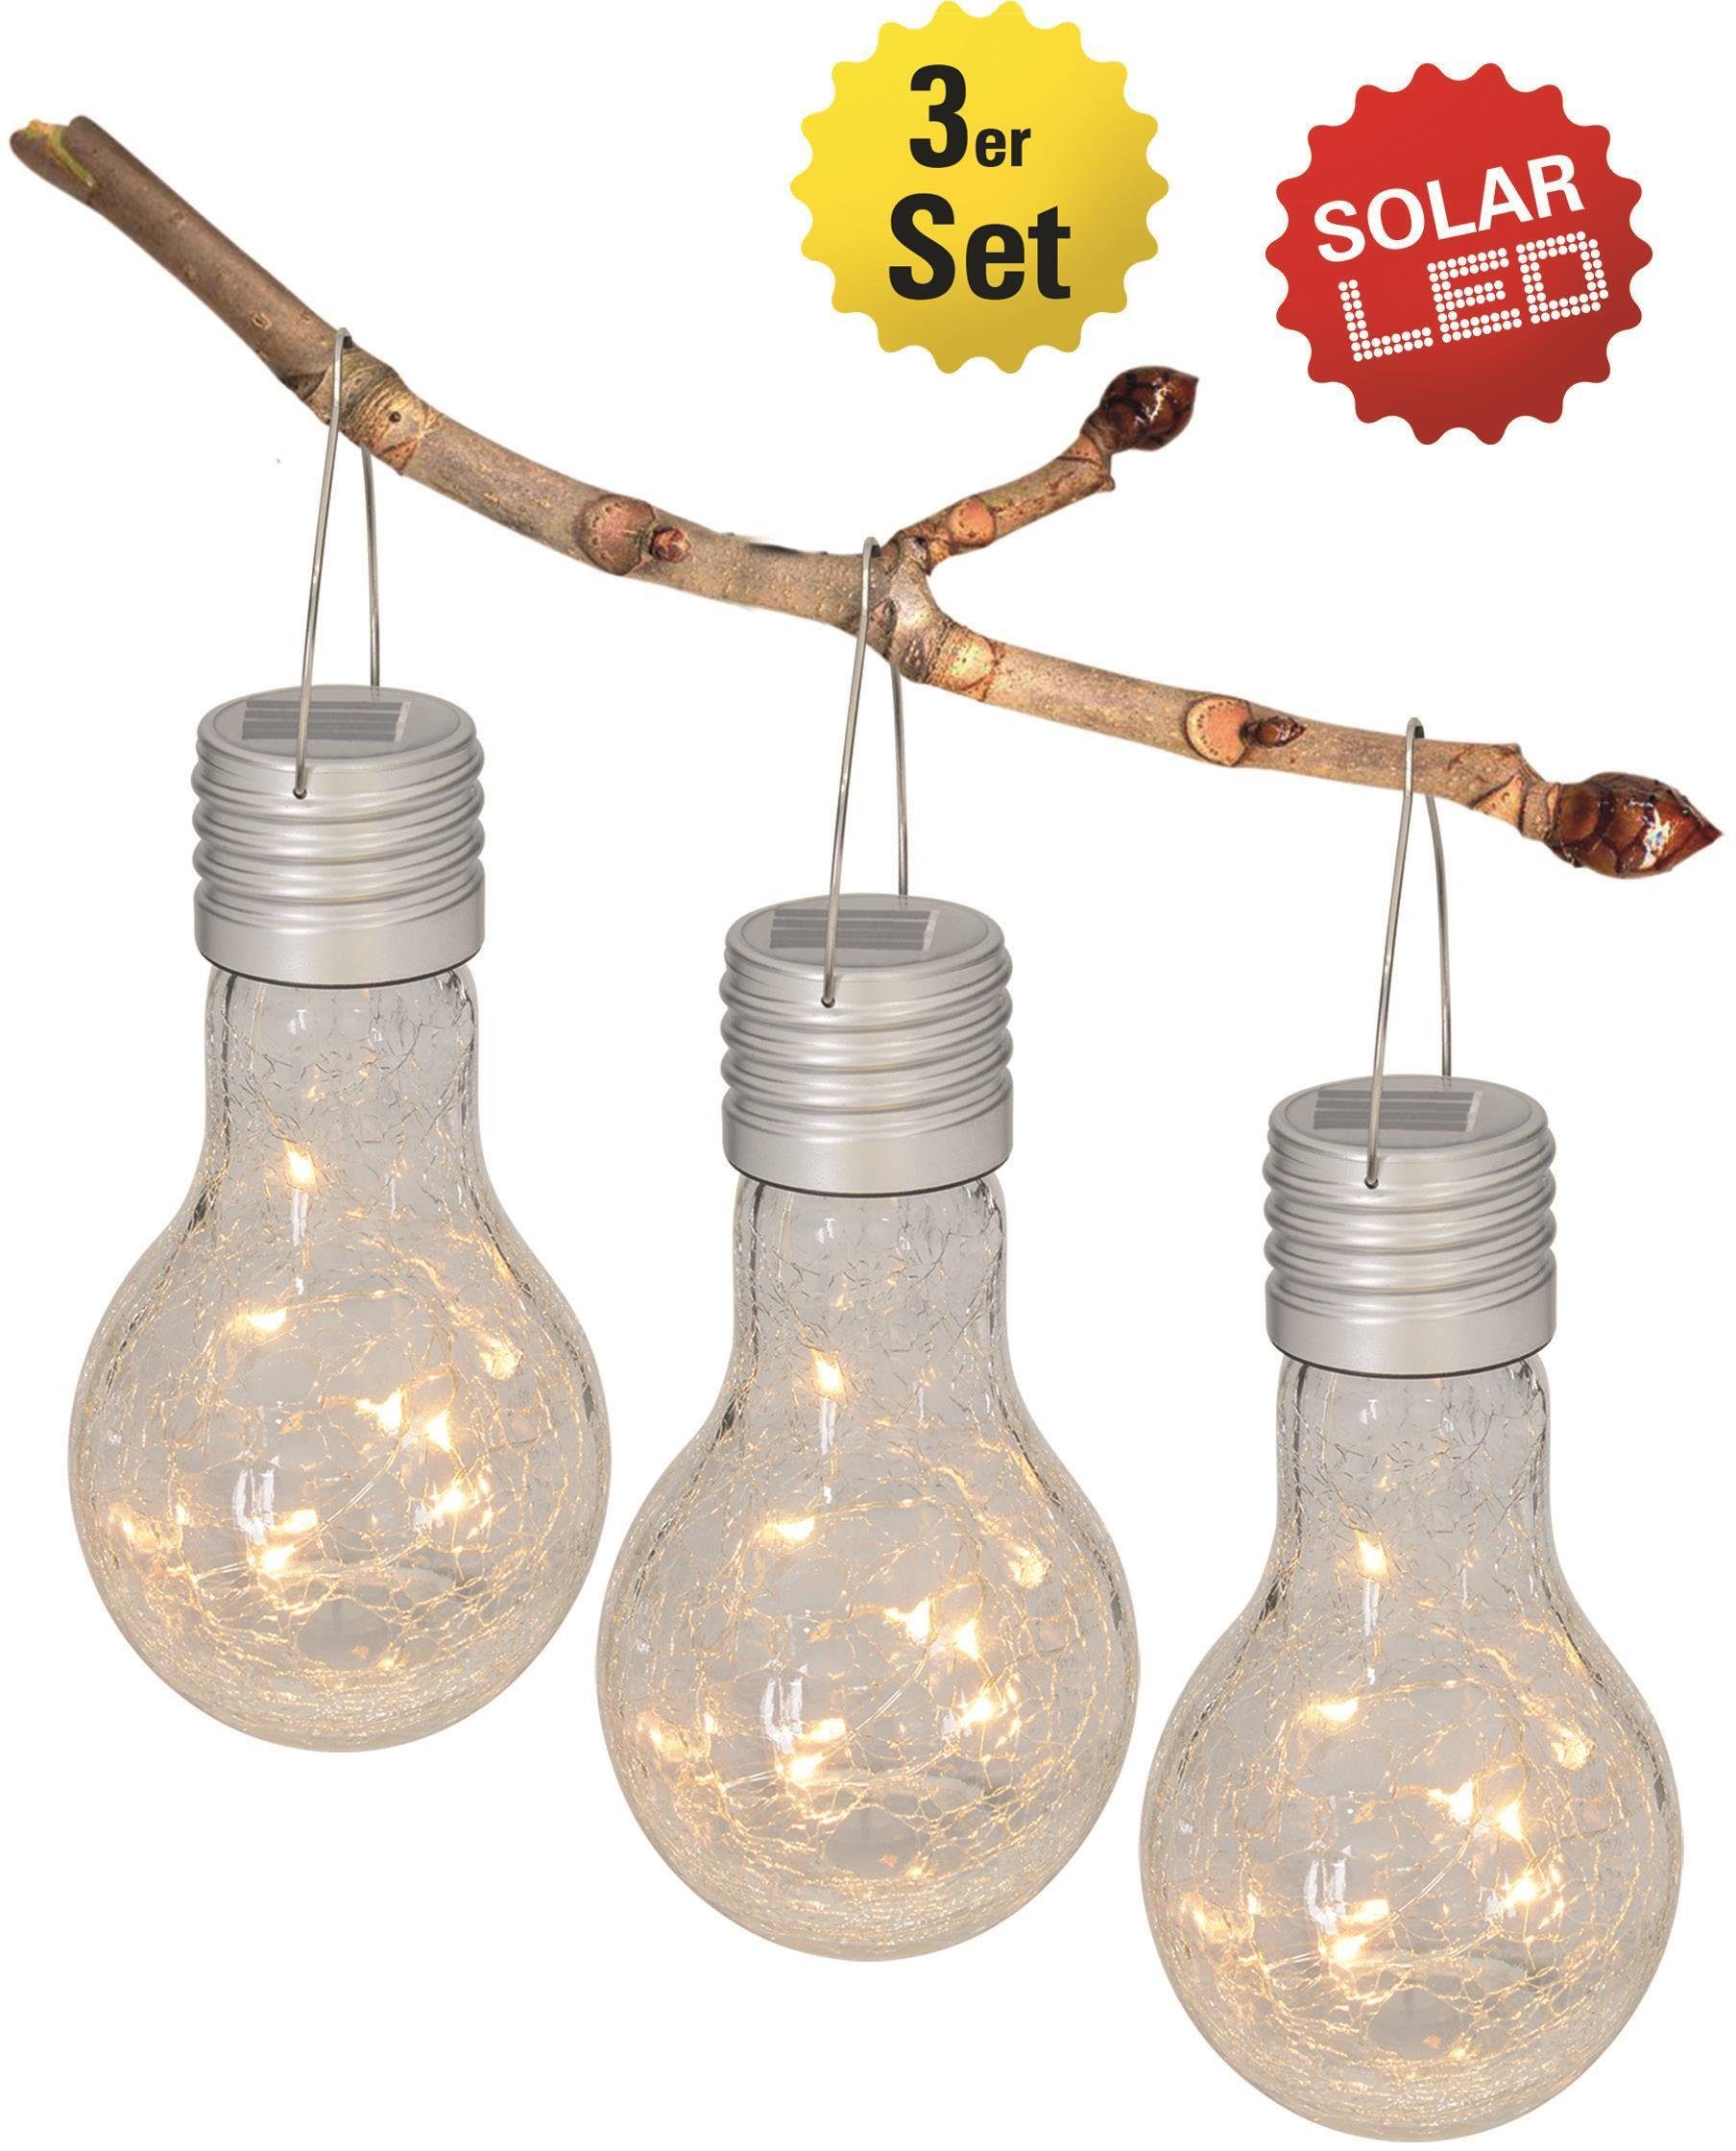 Bulb, integriert, Material: Crackle Set Aufhängemöglichkeit, Gartenleuchte 3er LED Farbe: fest klar, Glas, Warmweiß, LED näve